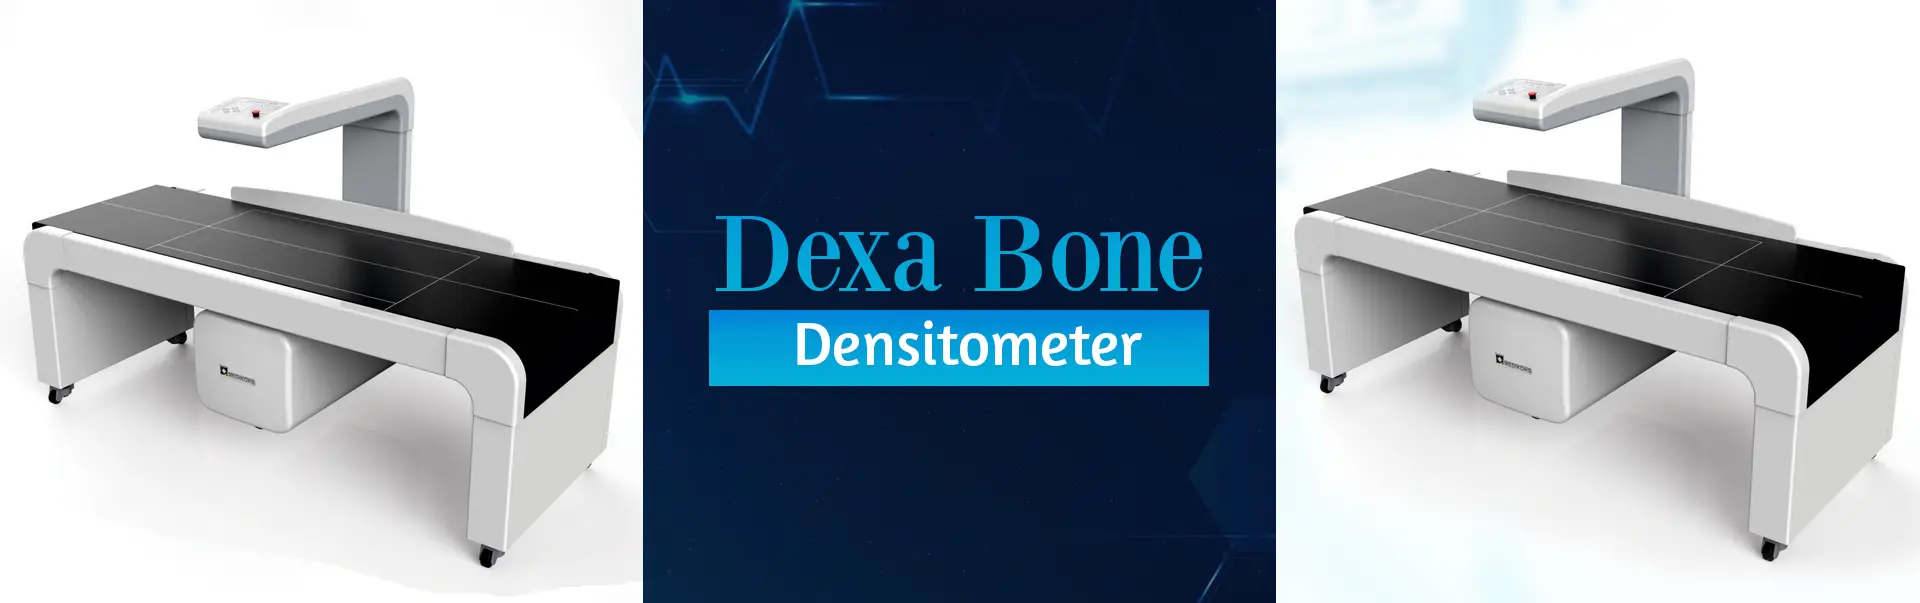 Dexa Bone Densitometer Manufacturers in Dhanbad